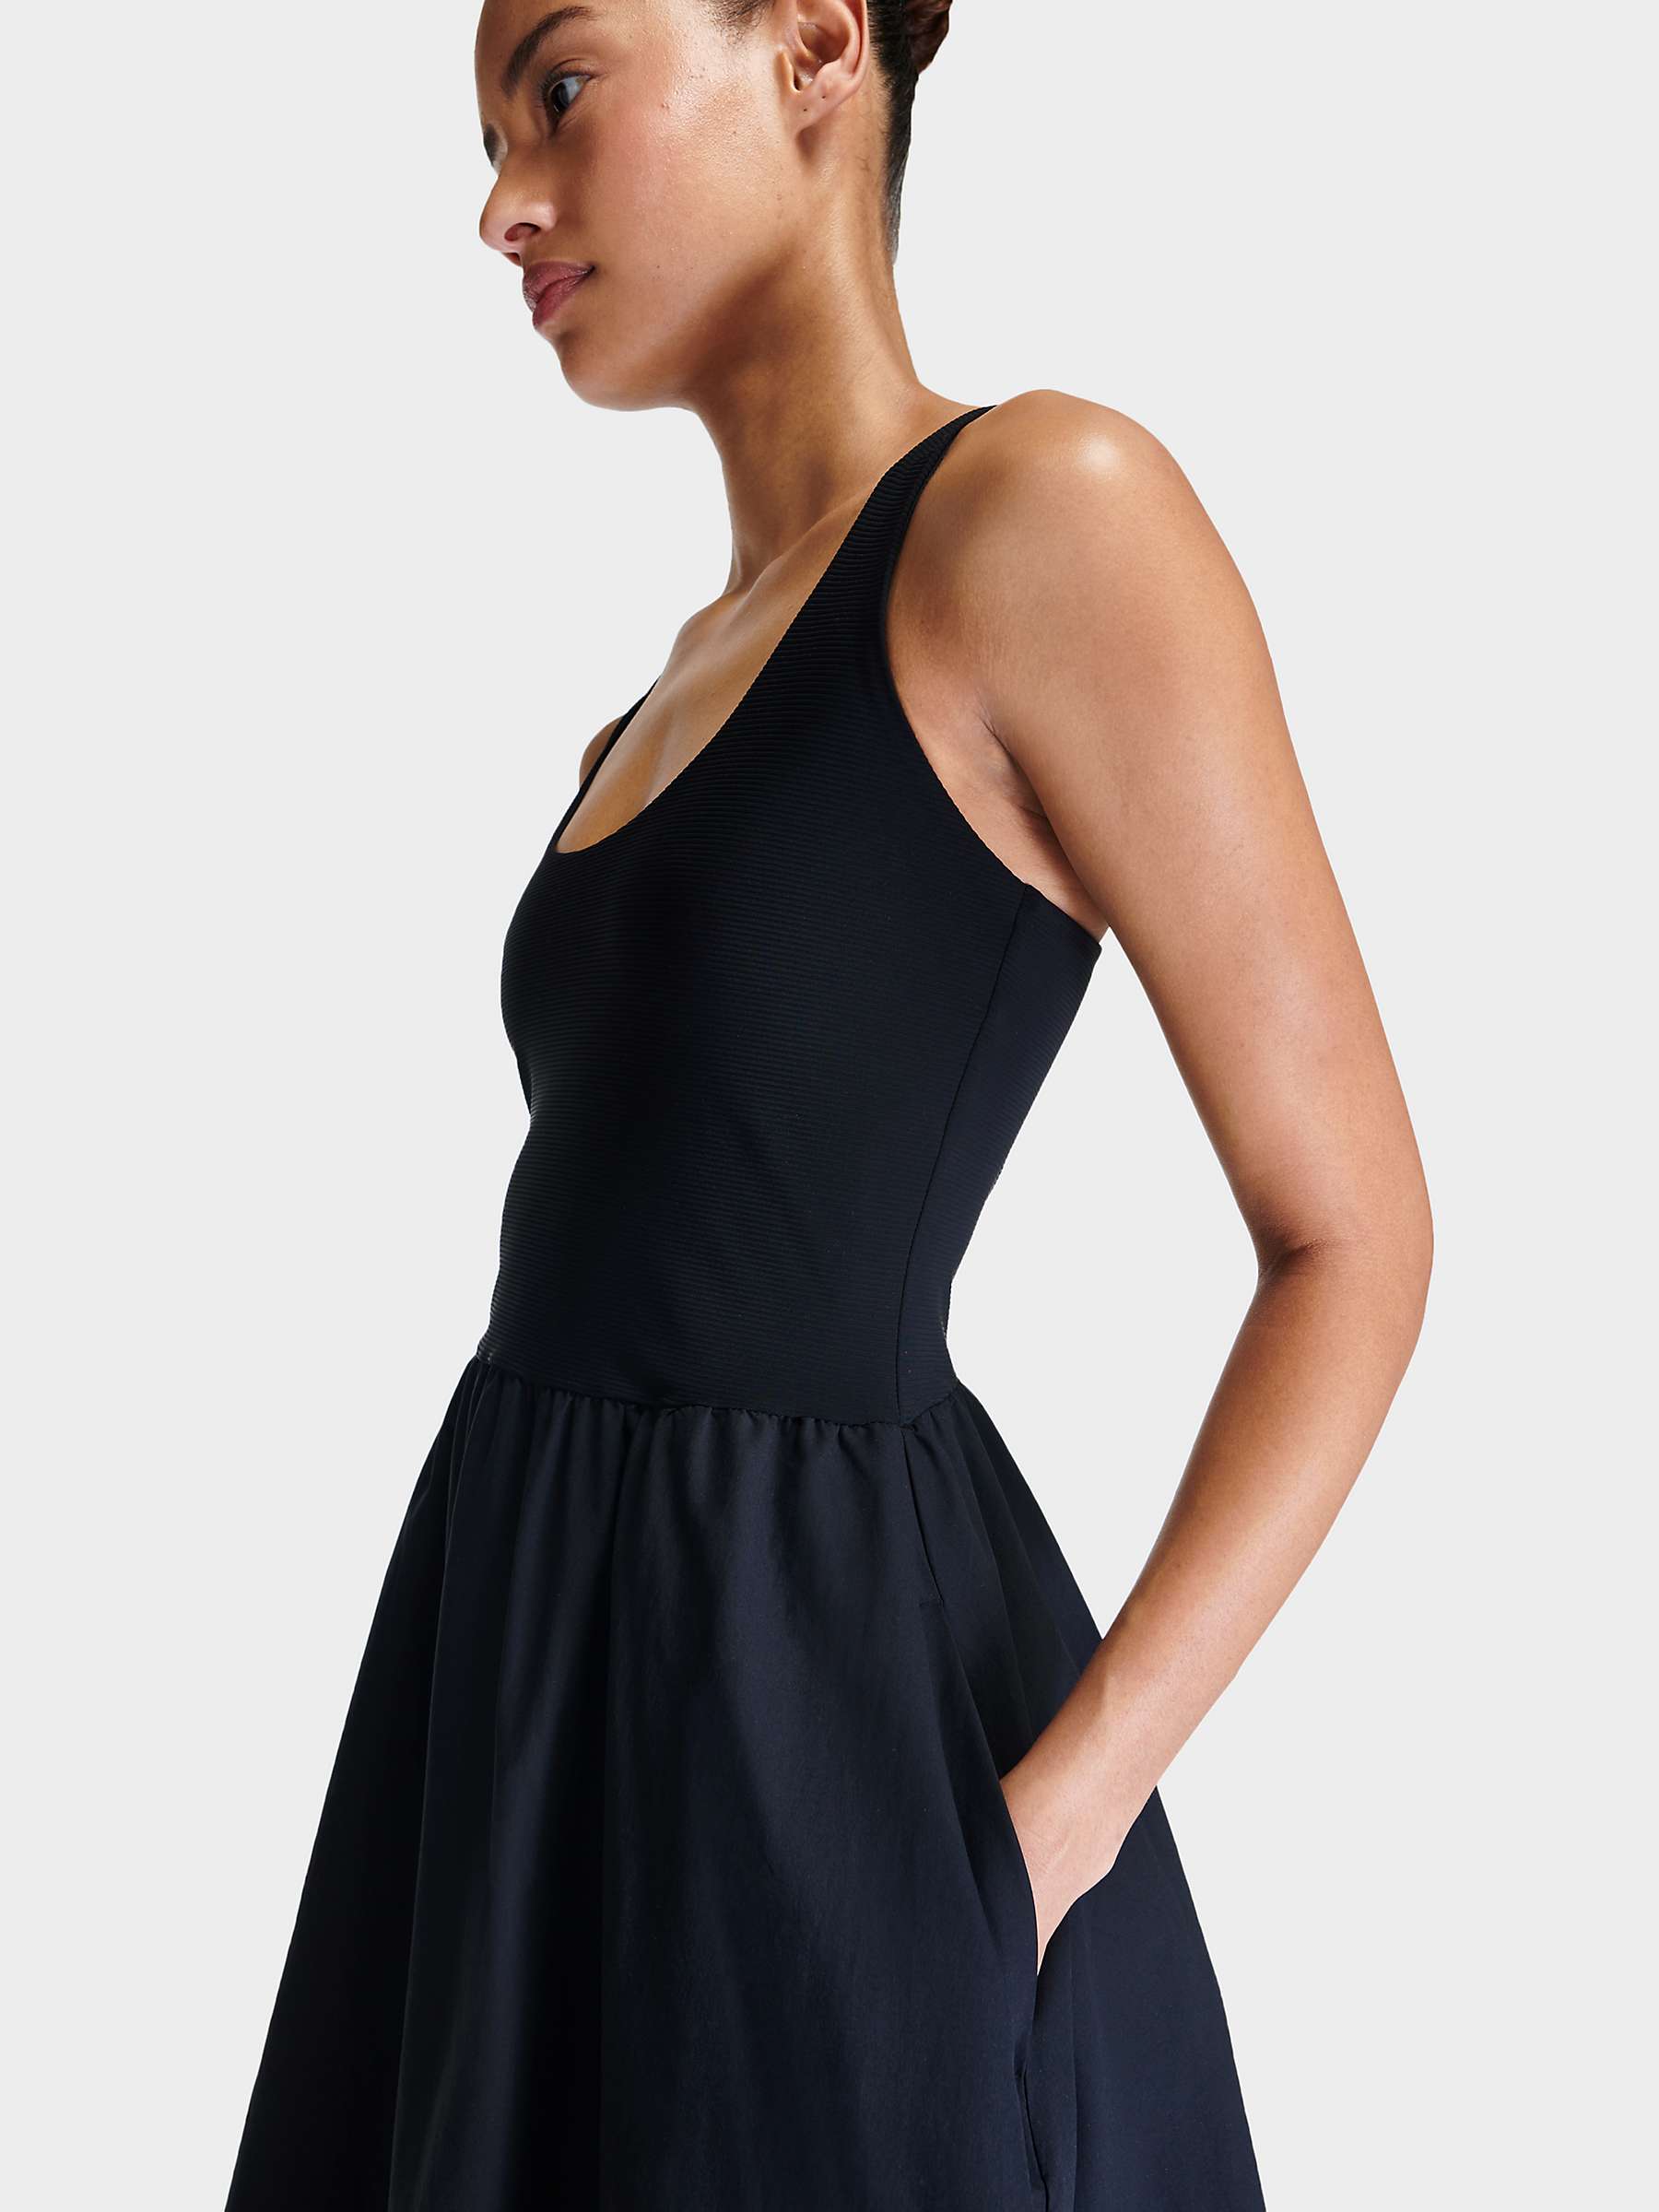 Buy Sweaty Betty Explorer Ribbed Race Dress, Black Online at johnlewis.com